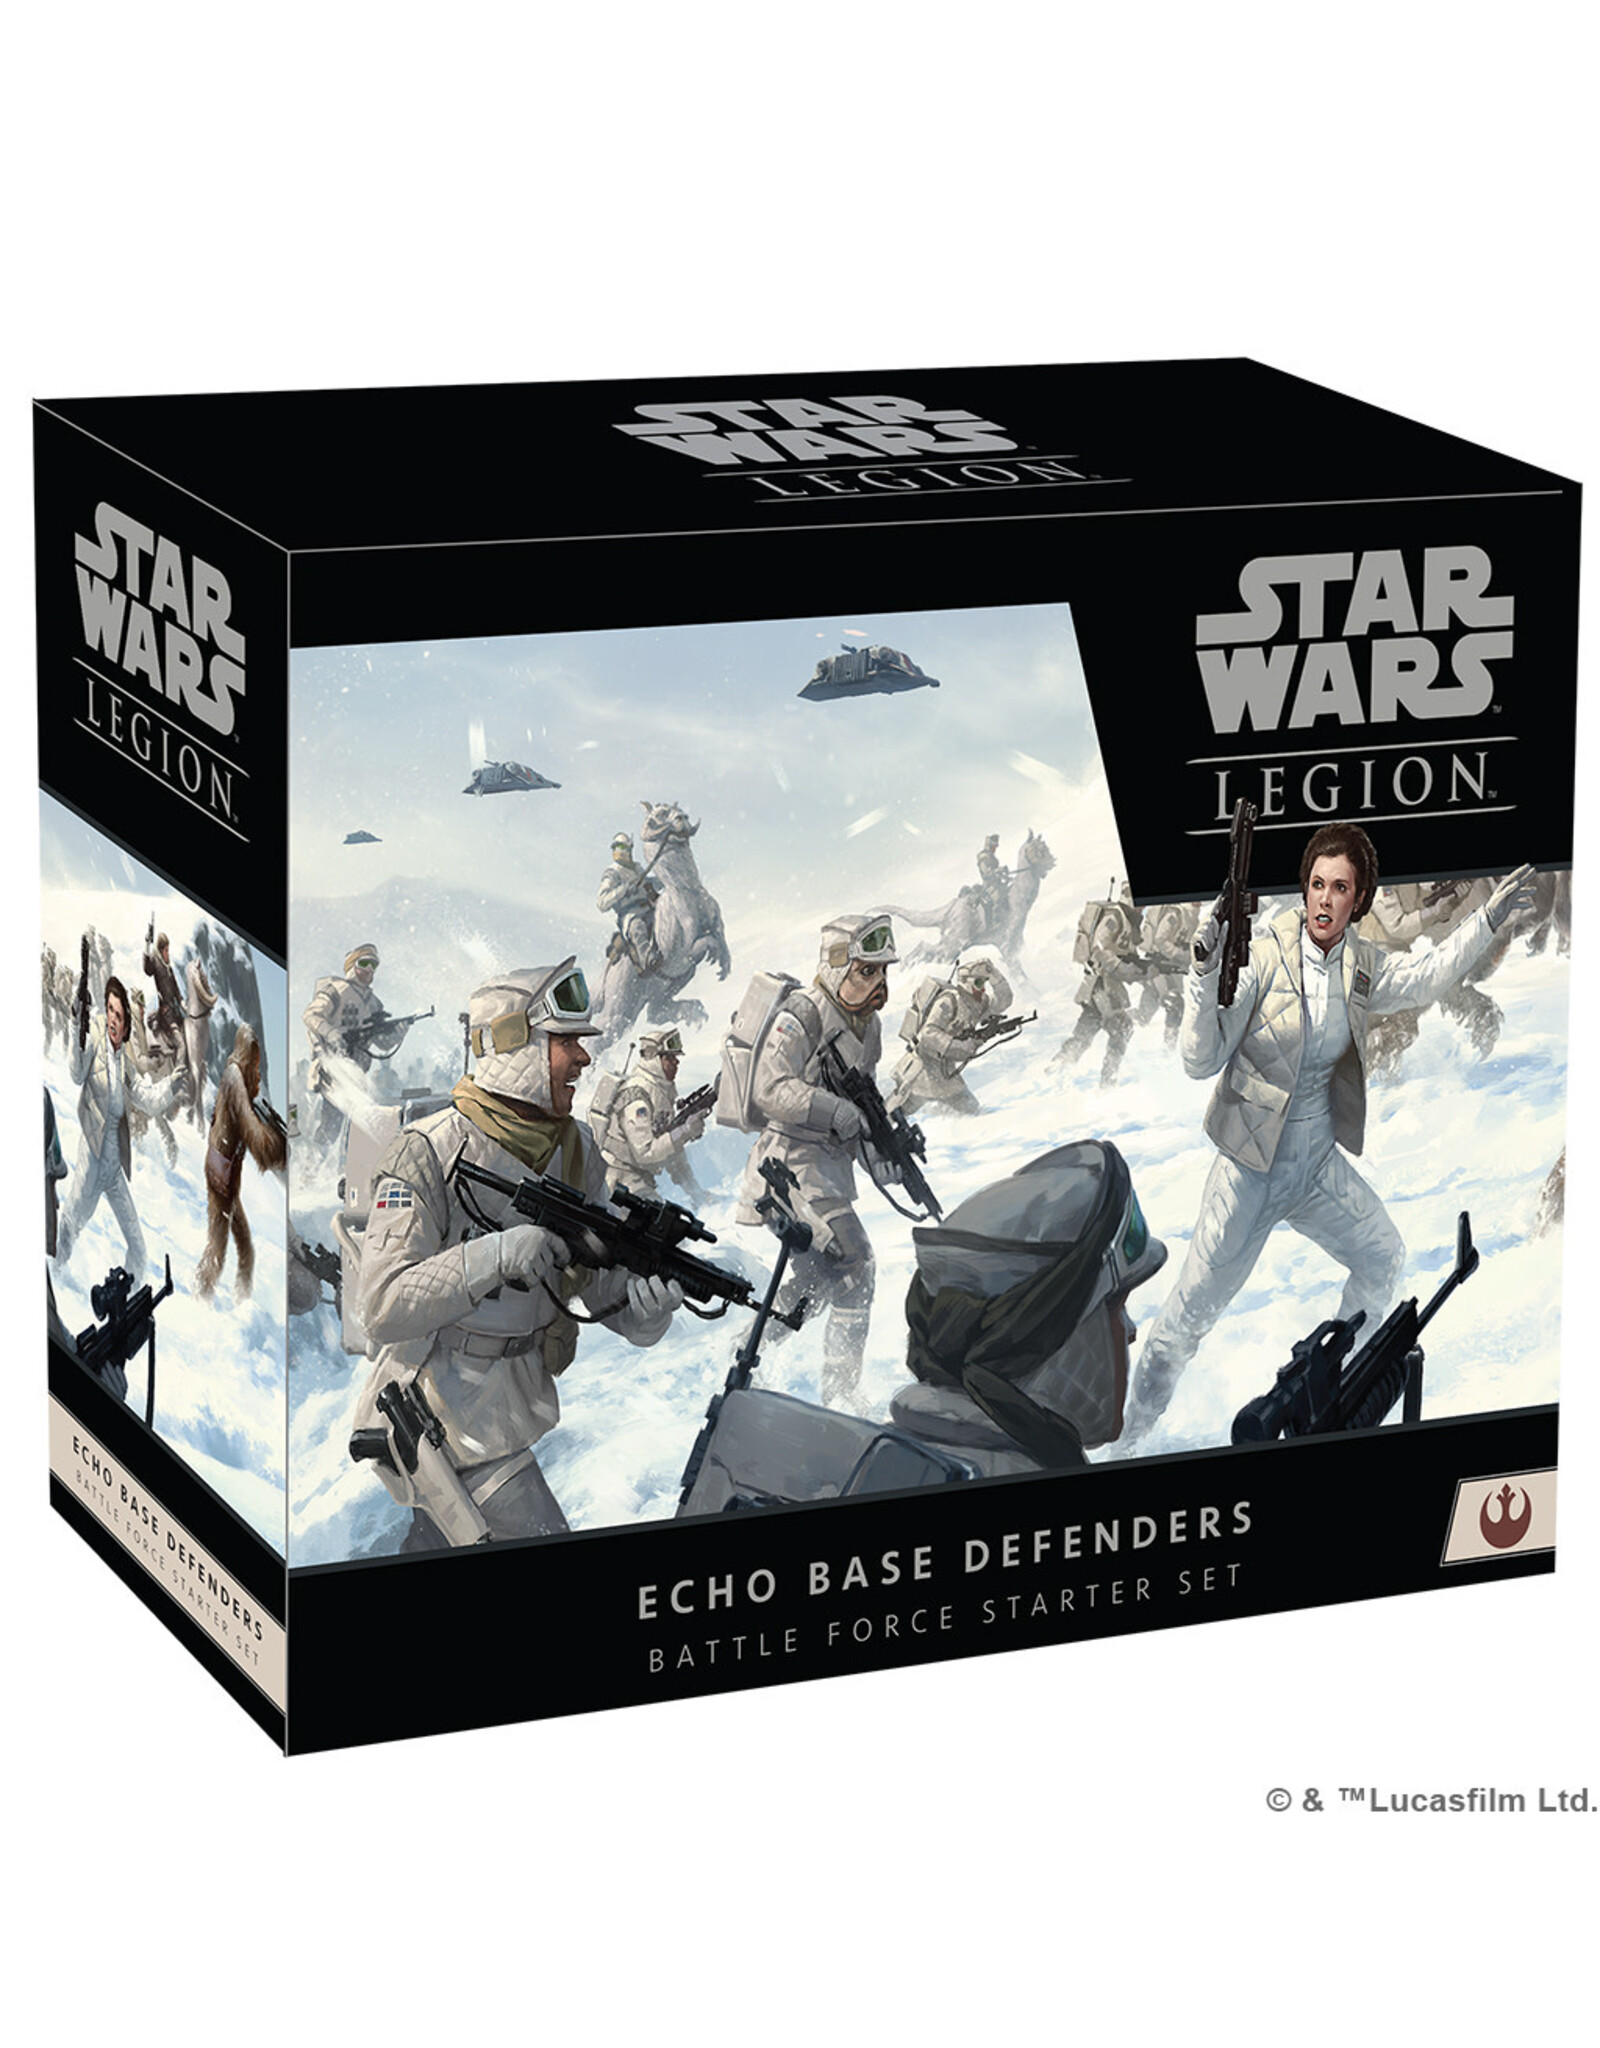 STAR WARS LEGION Star Wars Legion Echo Base Defenders Battle Force Starter Set